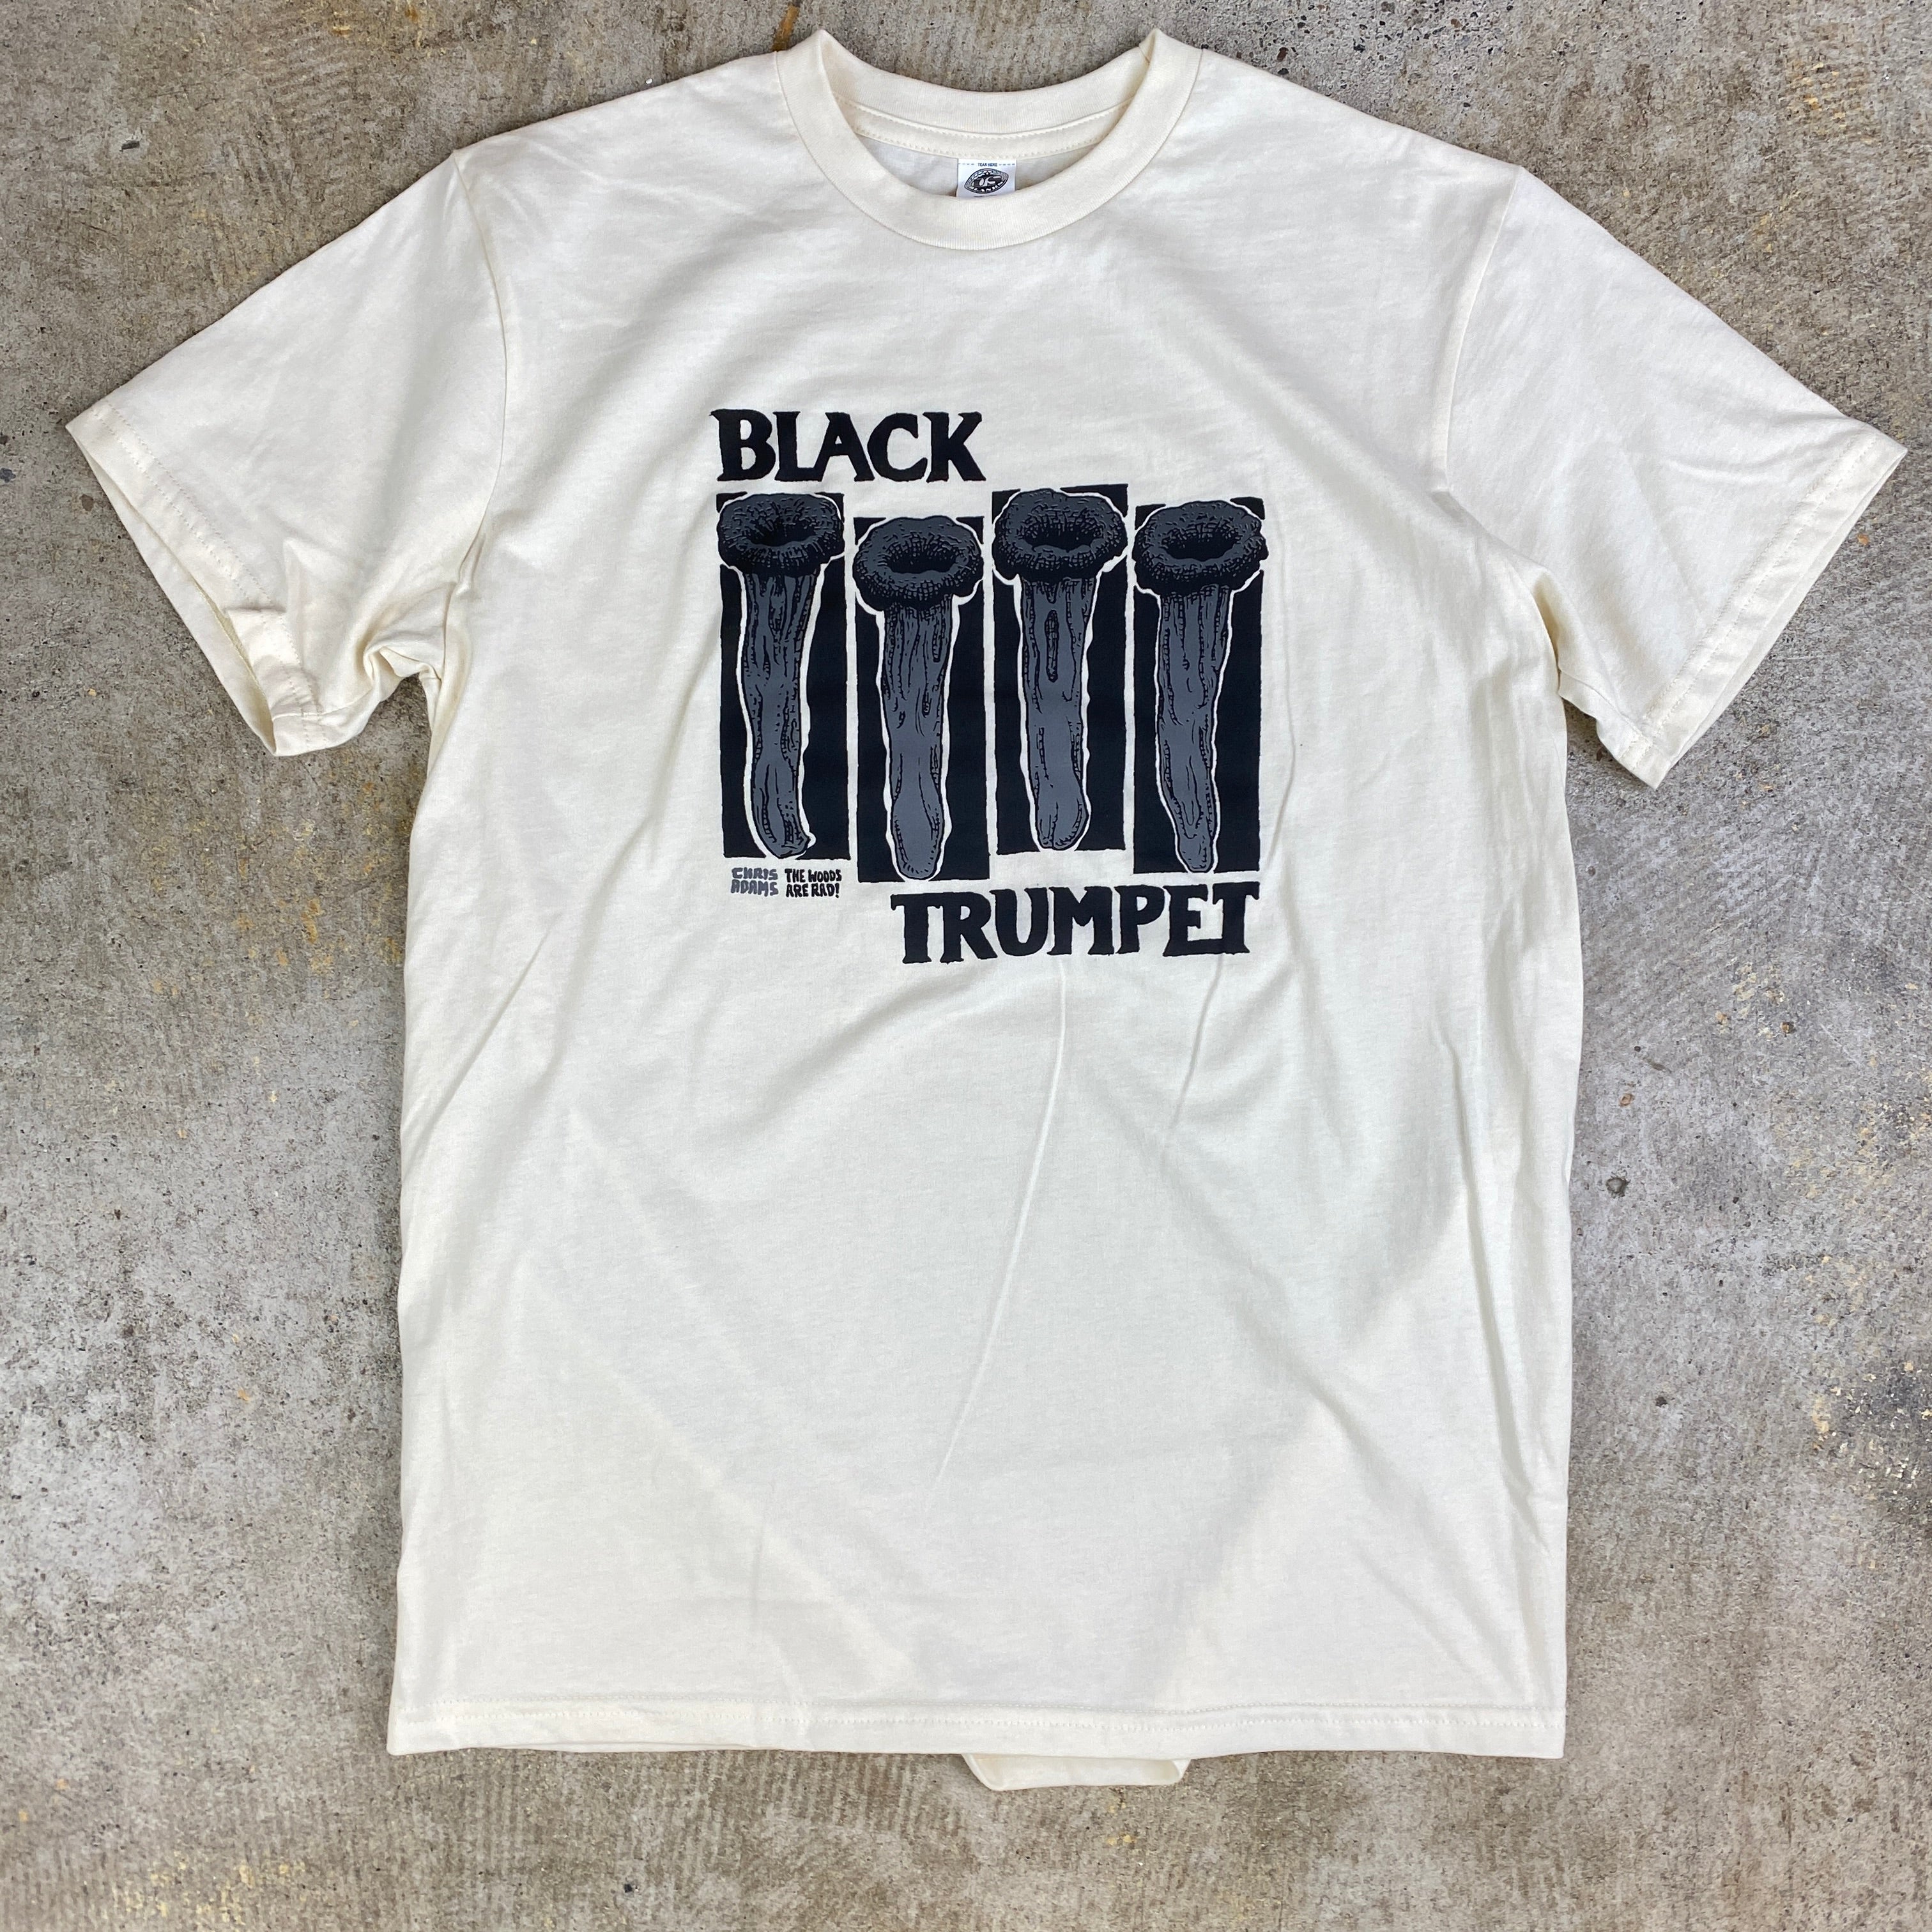 Black Trumpet Shirt, Cream Cotton